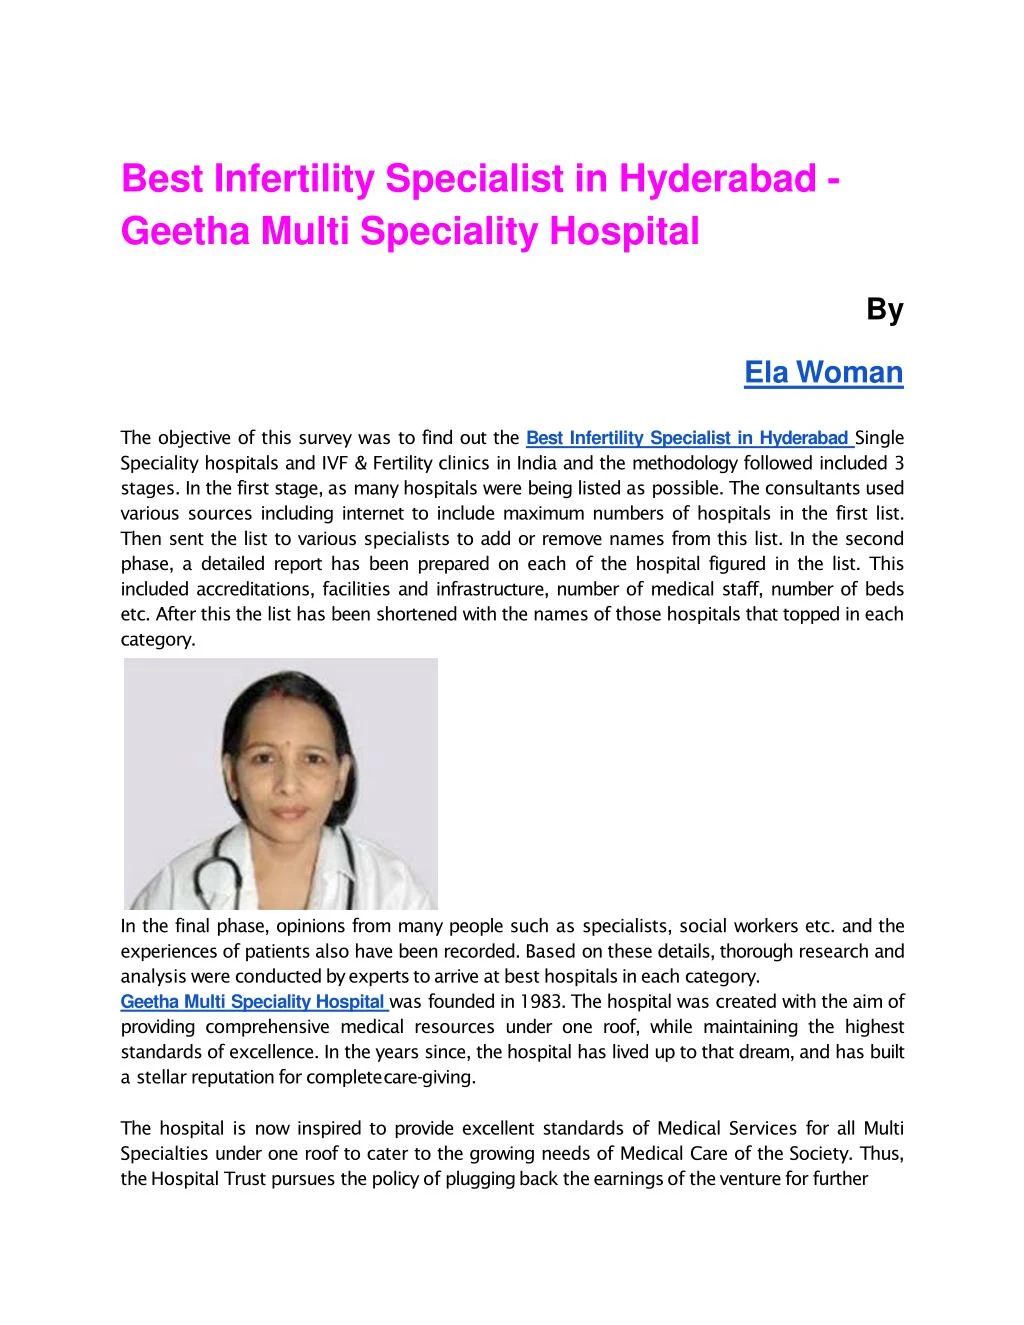 best infertility specialist in hyderabad geetha